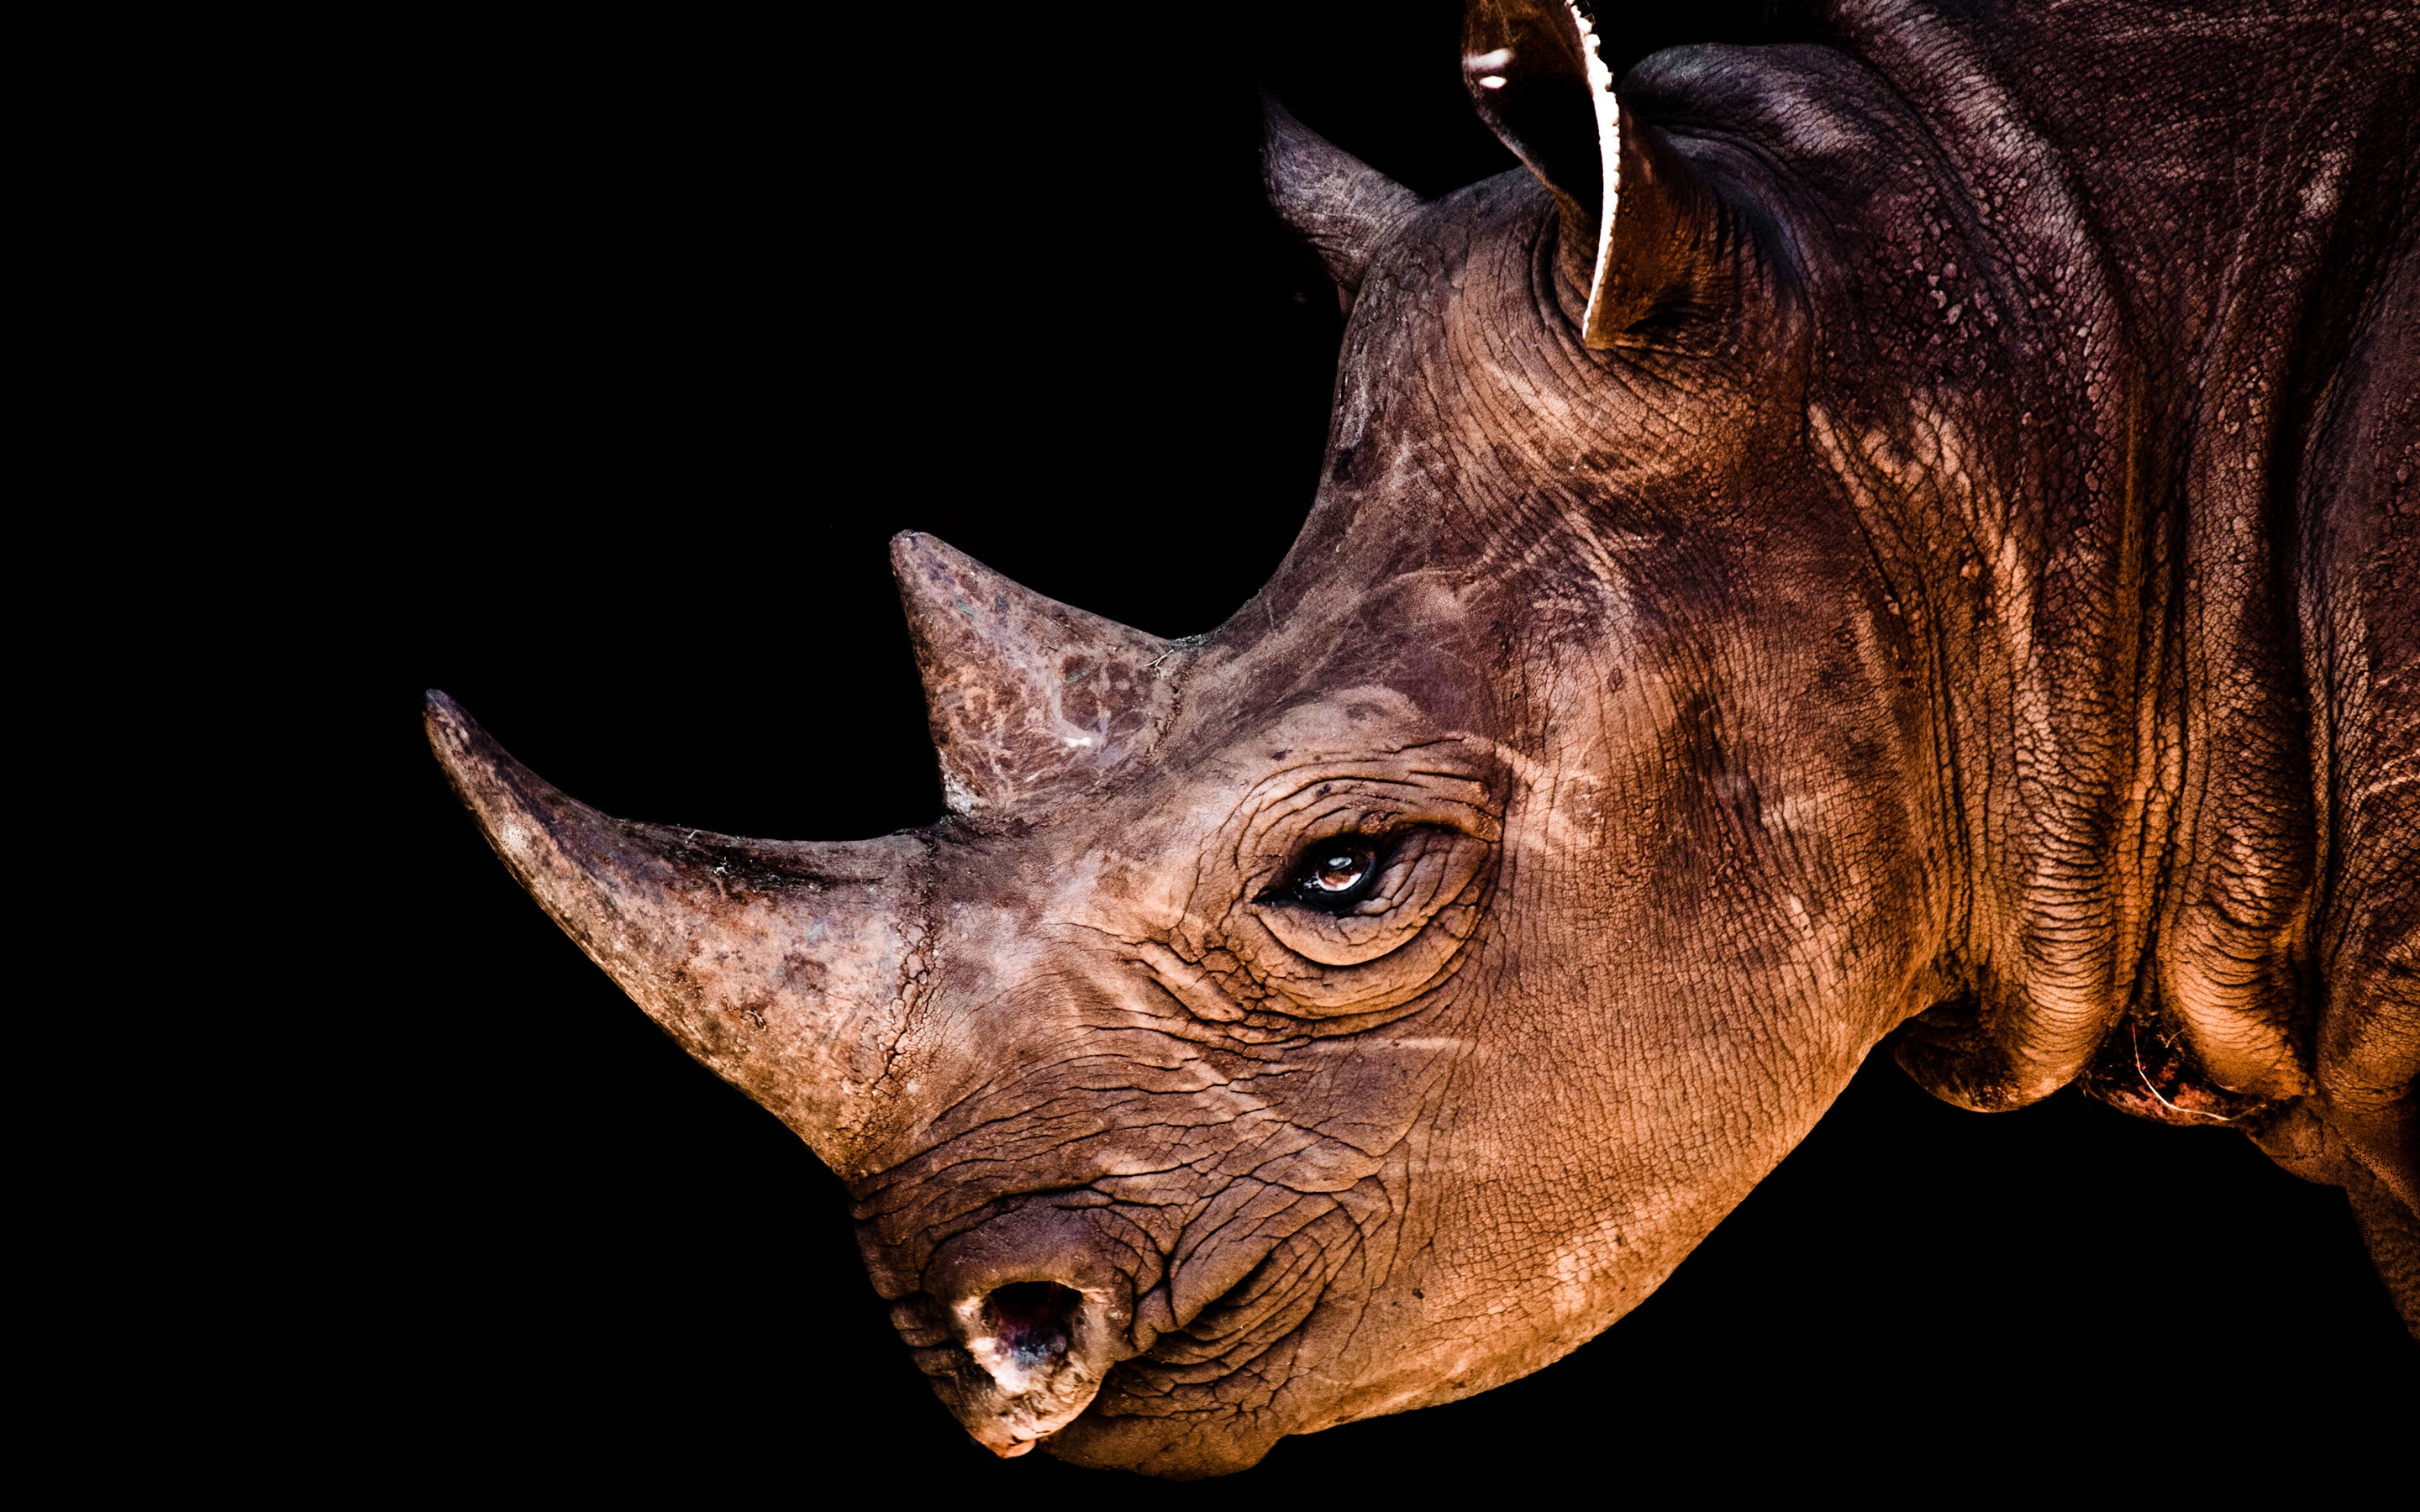 Rhino Face for 2880 x 1800 Retina Display resolution